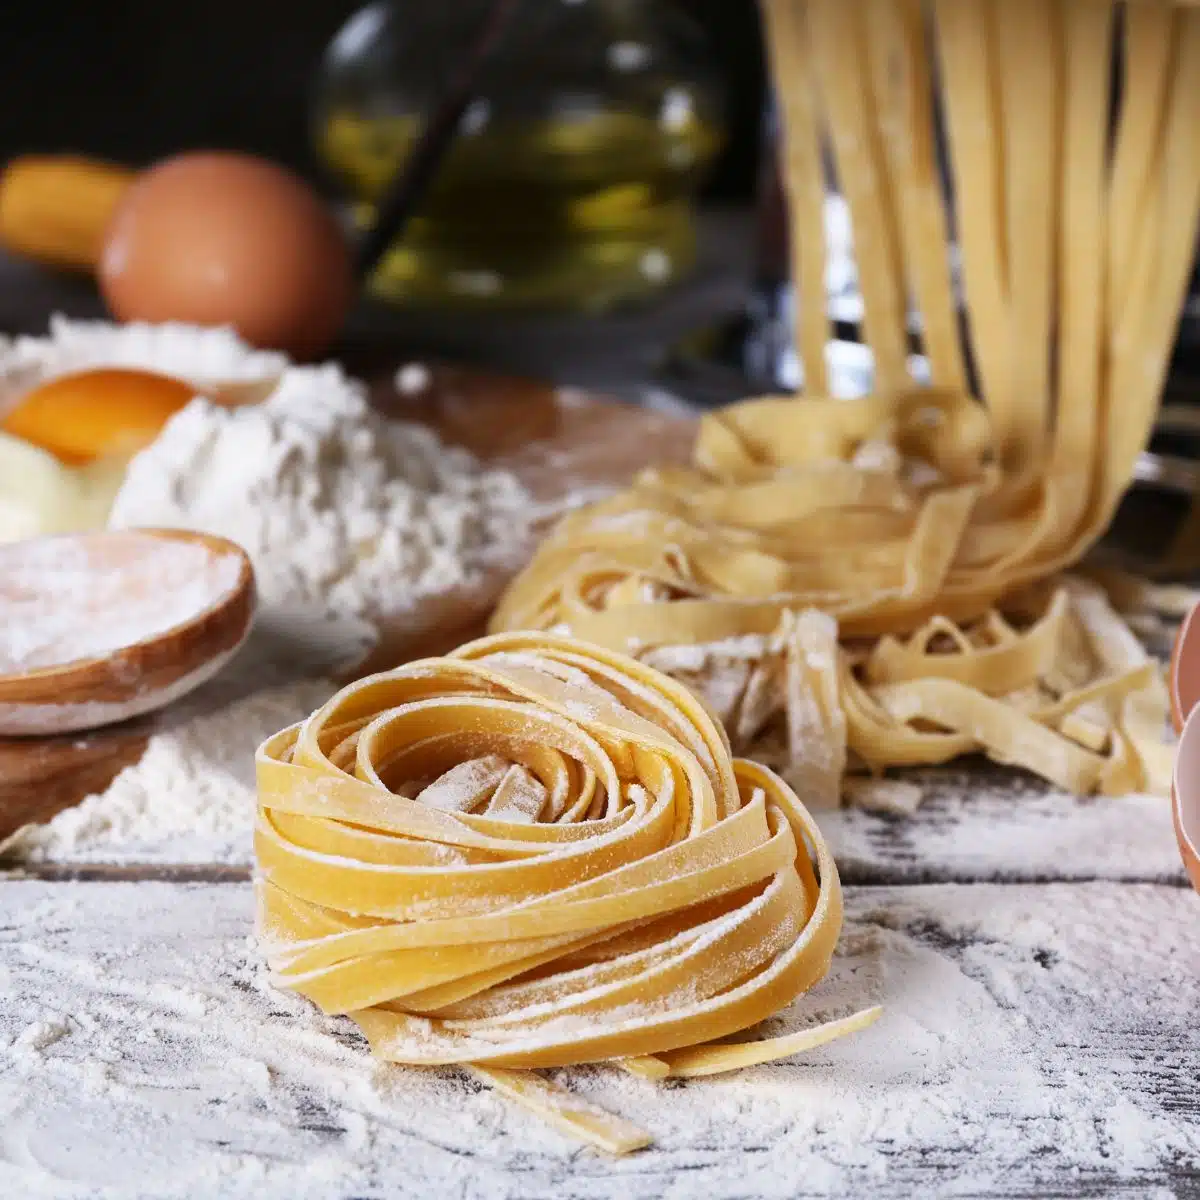 10 Best Selling Fettuccine Pasta Makers for 2023 - The Jerusalem Post